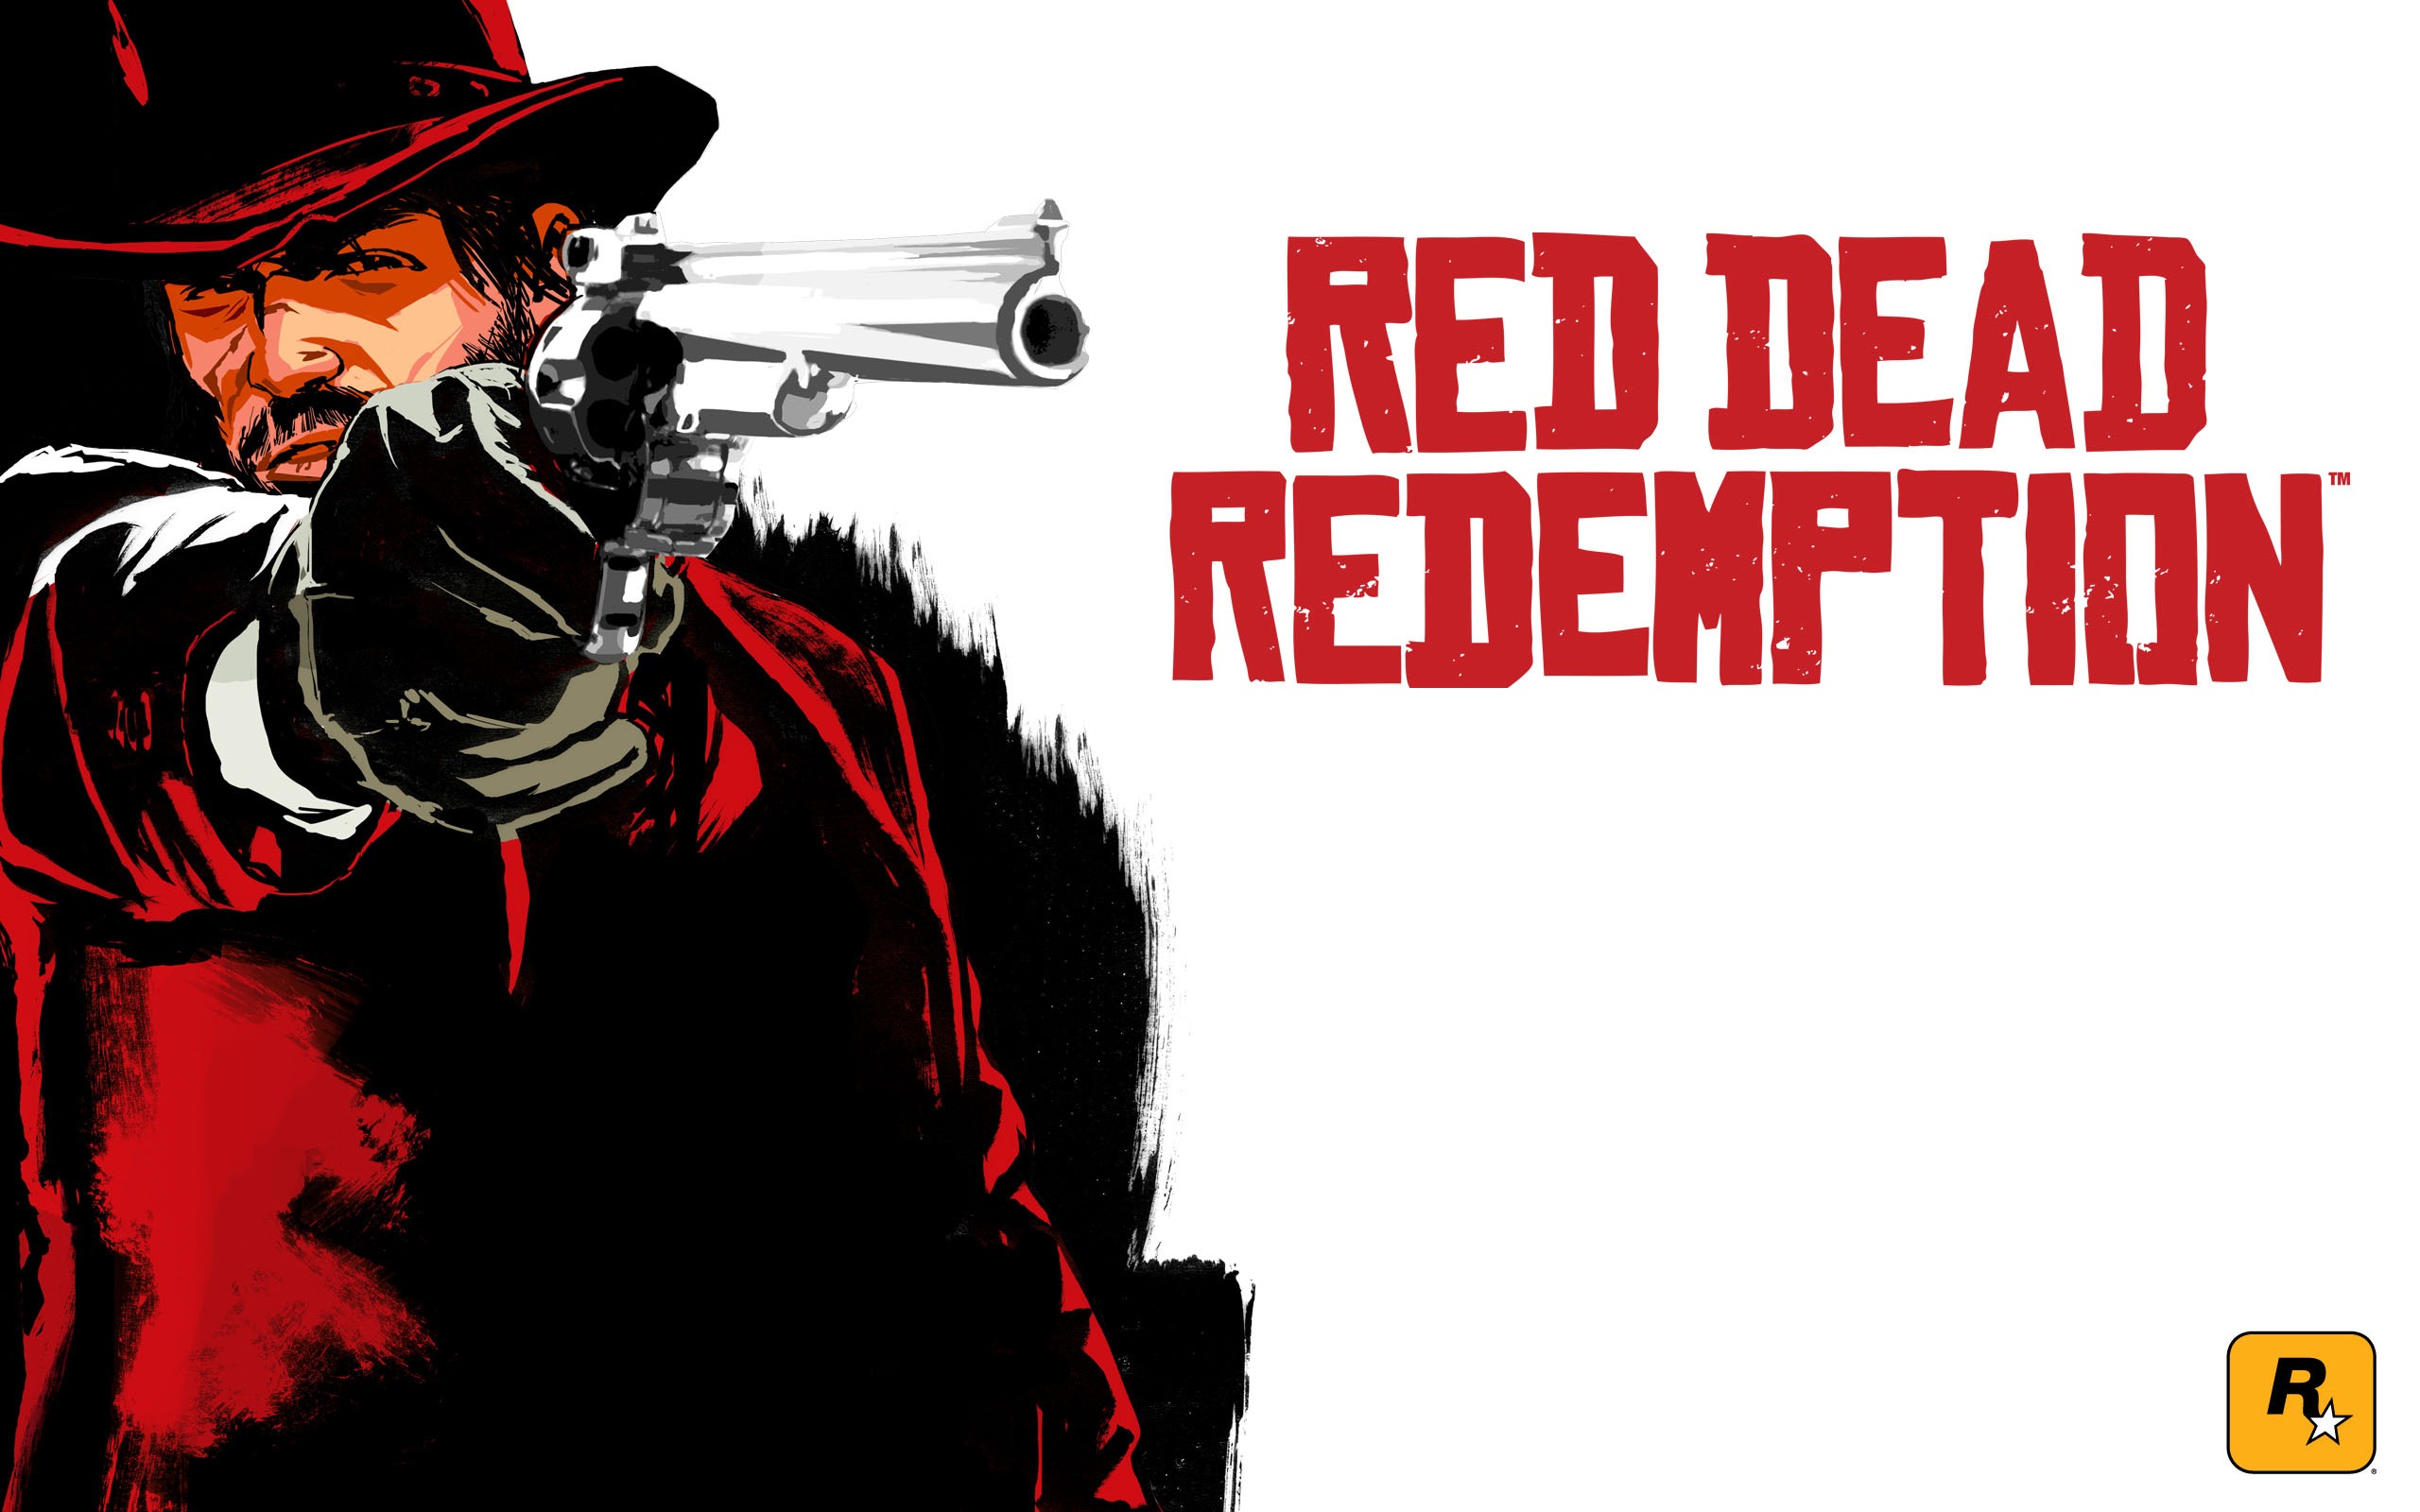 Red Dead Redemption HD papel tapiz #11 - 2560x1600